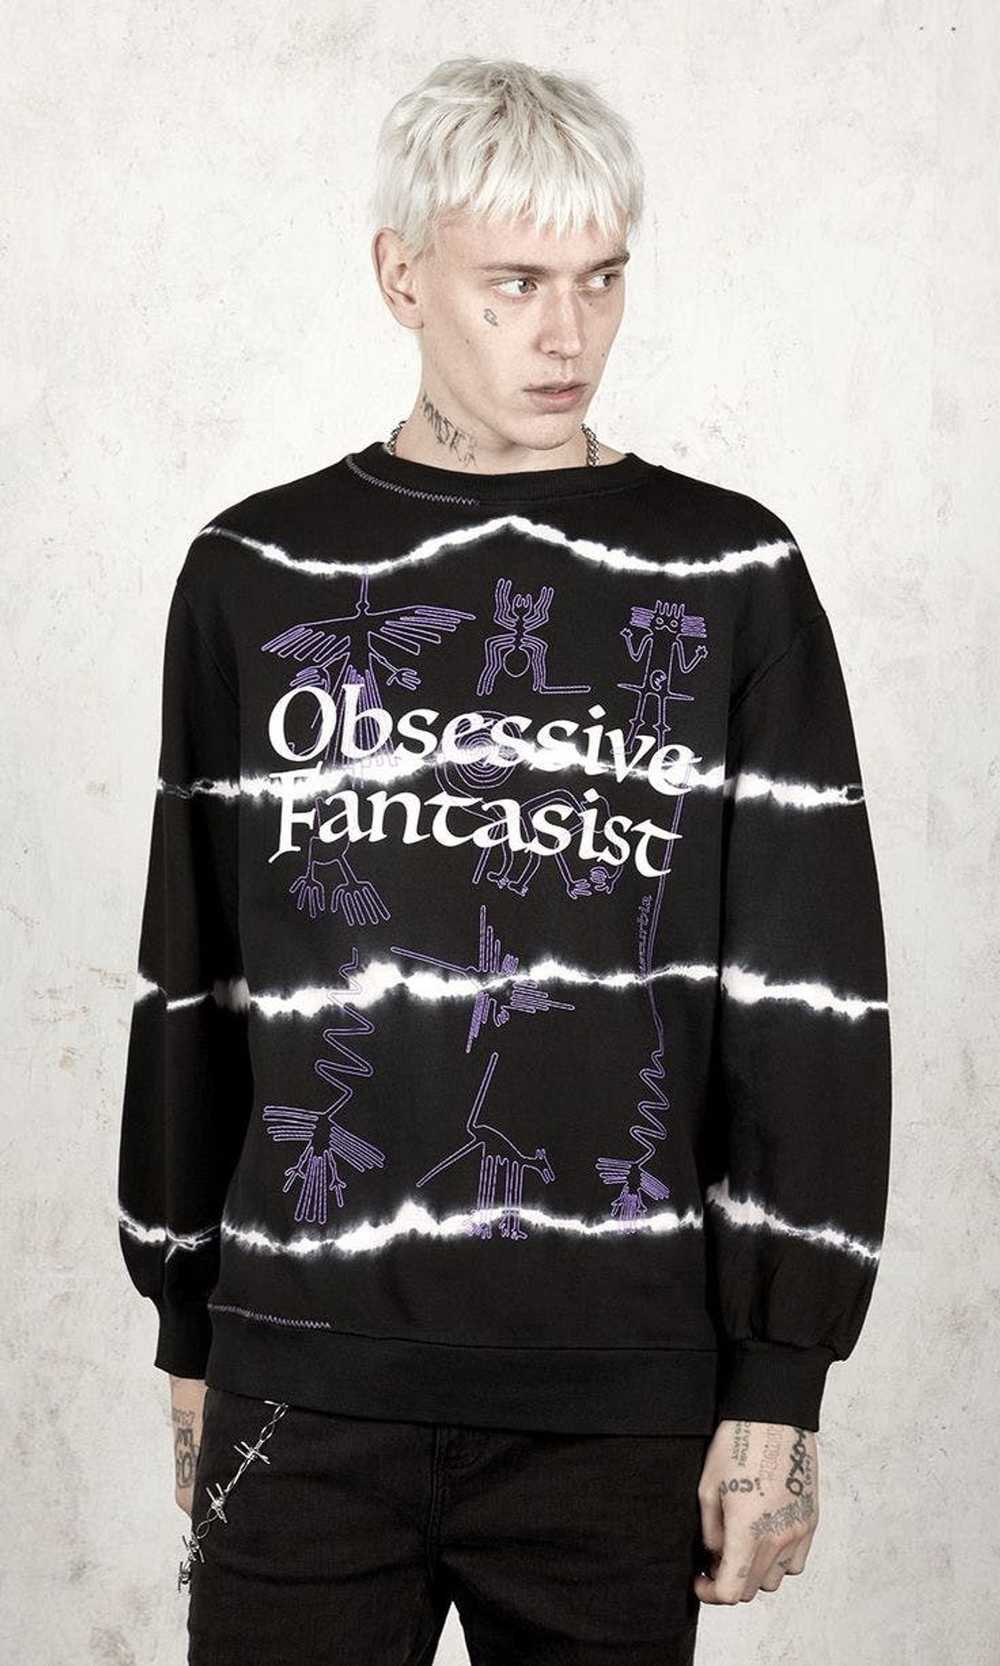 Disturbia Obsessive Fantasist tie dye sweater - image 6